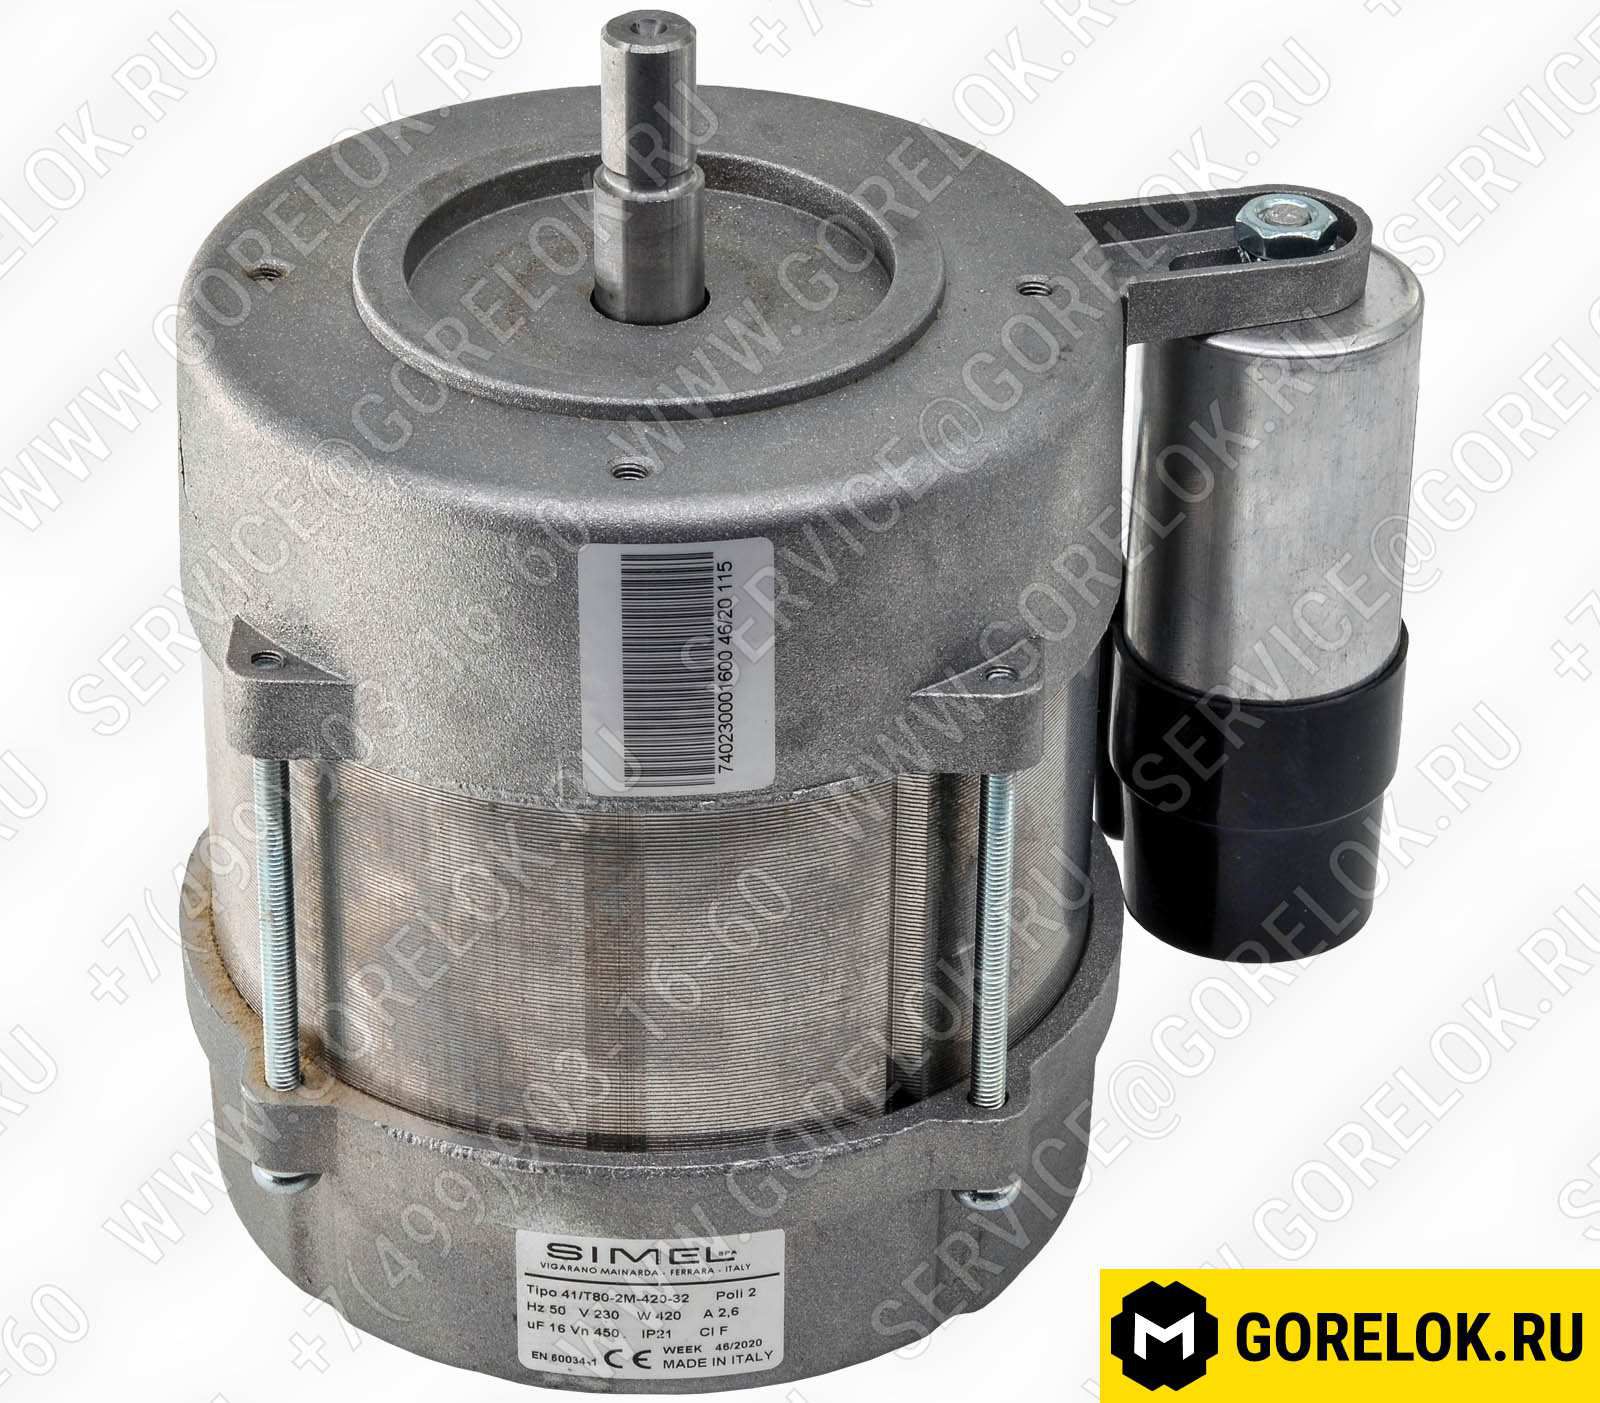 653008137 Жидкотопливные компоненты: Газавый клапан WG-130 (Sime)